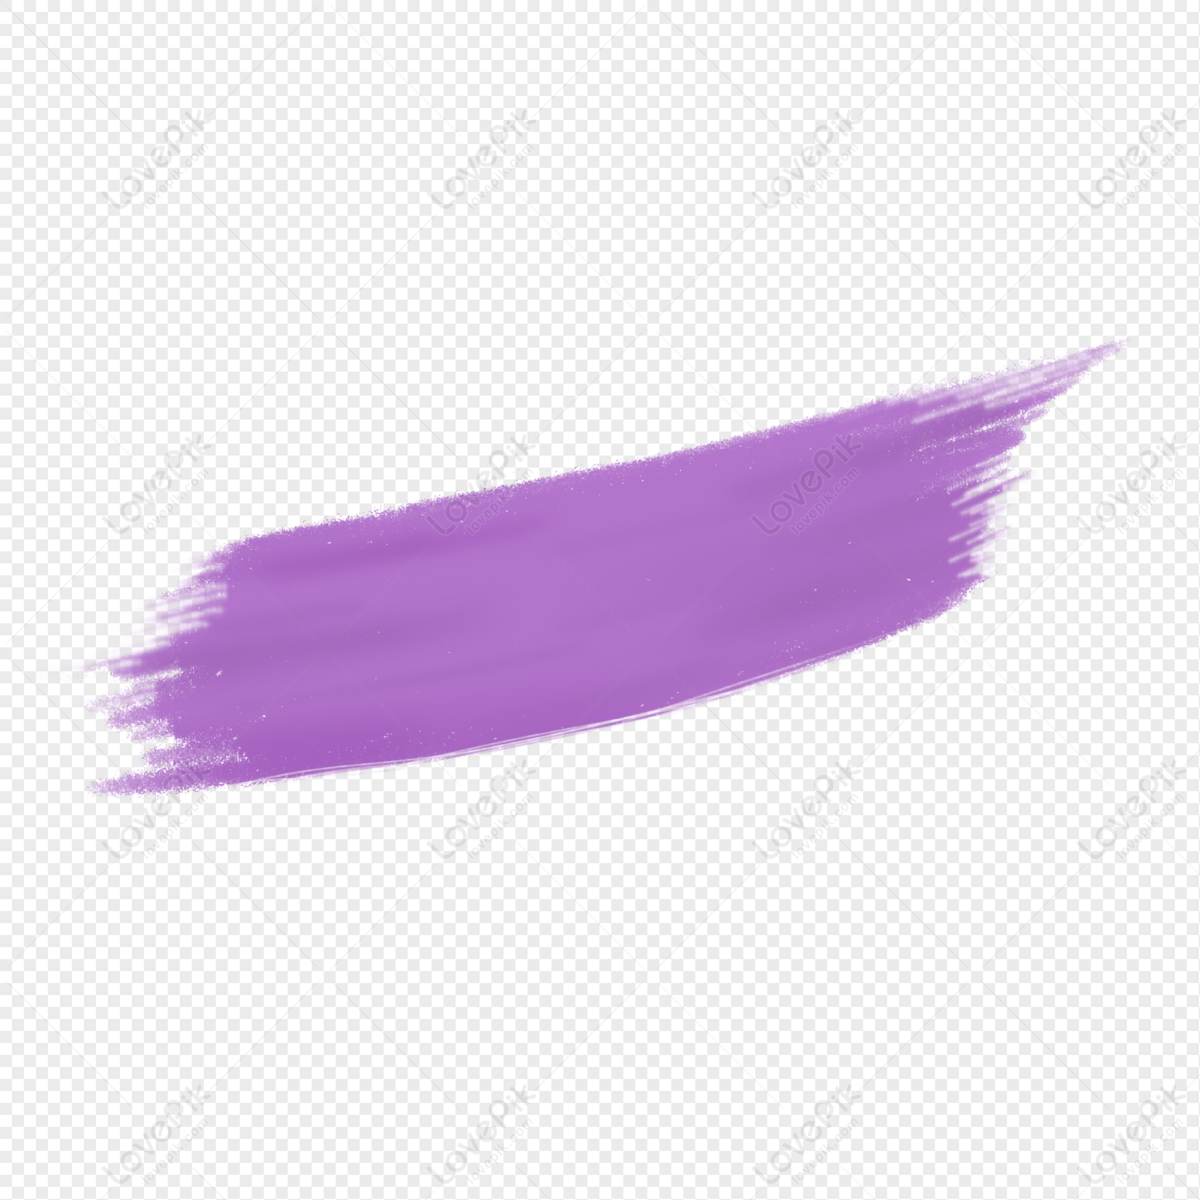 Pixlr Purple png download - 1024*1024 - Free Transparent Pixlr png  Download. - CleanPNG / KissPNG